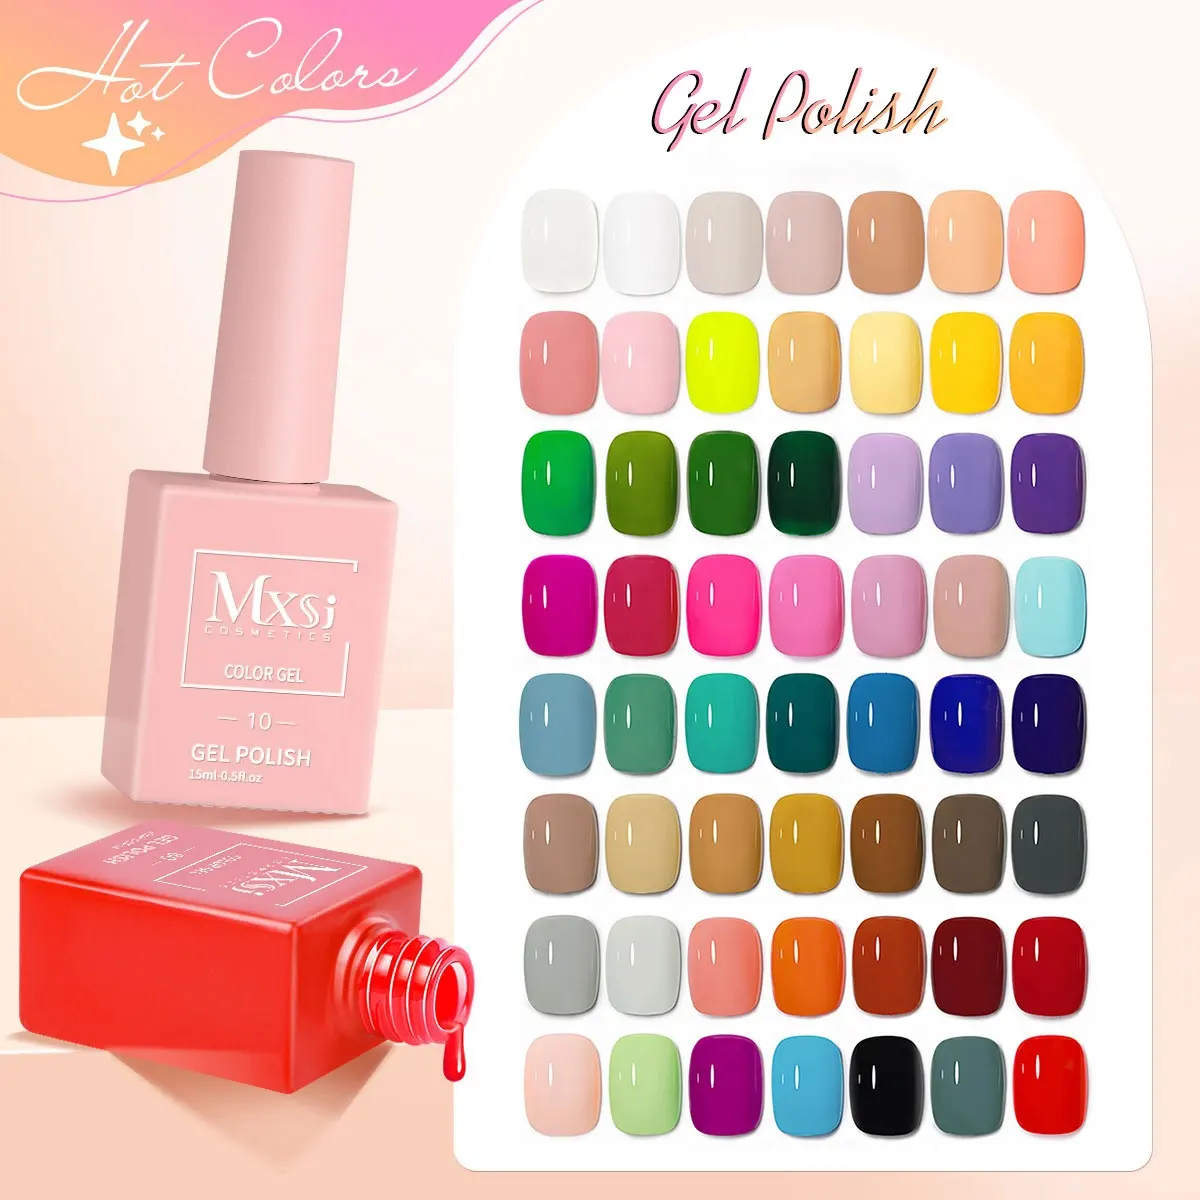 15ml 60 Colors Nails Paint Gel Polish Professional Gel Polish Kit Create Your Own Brand Uv Gel Private Label Nail Polish Set